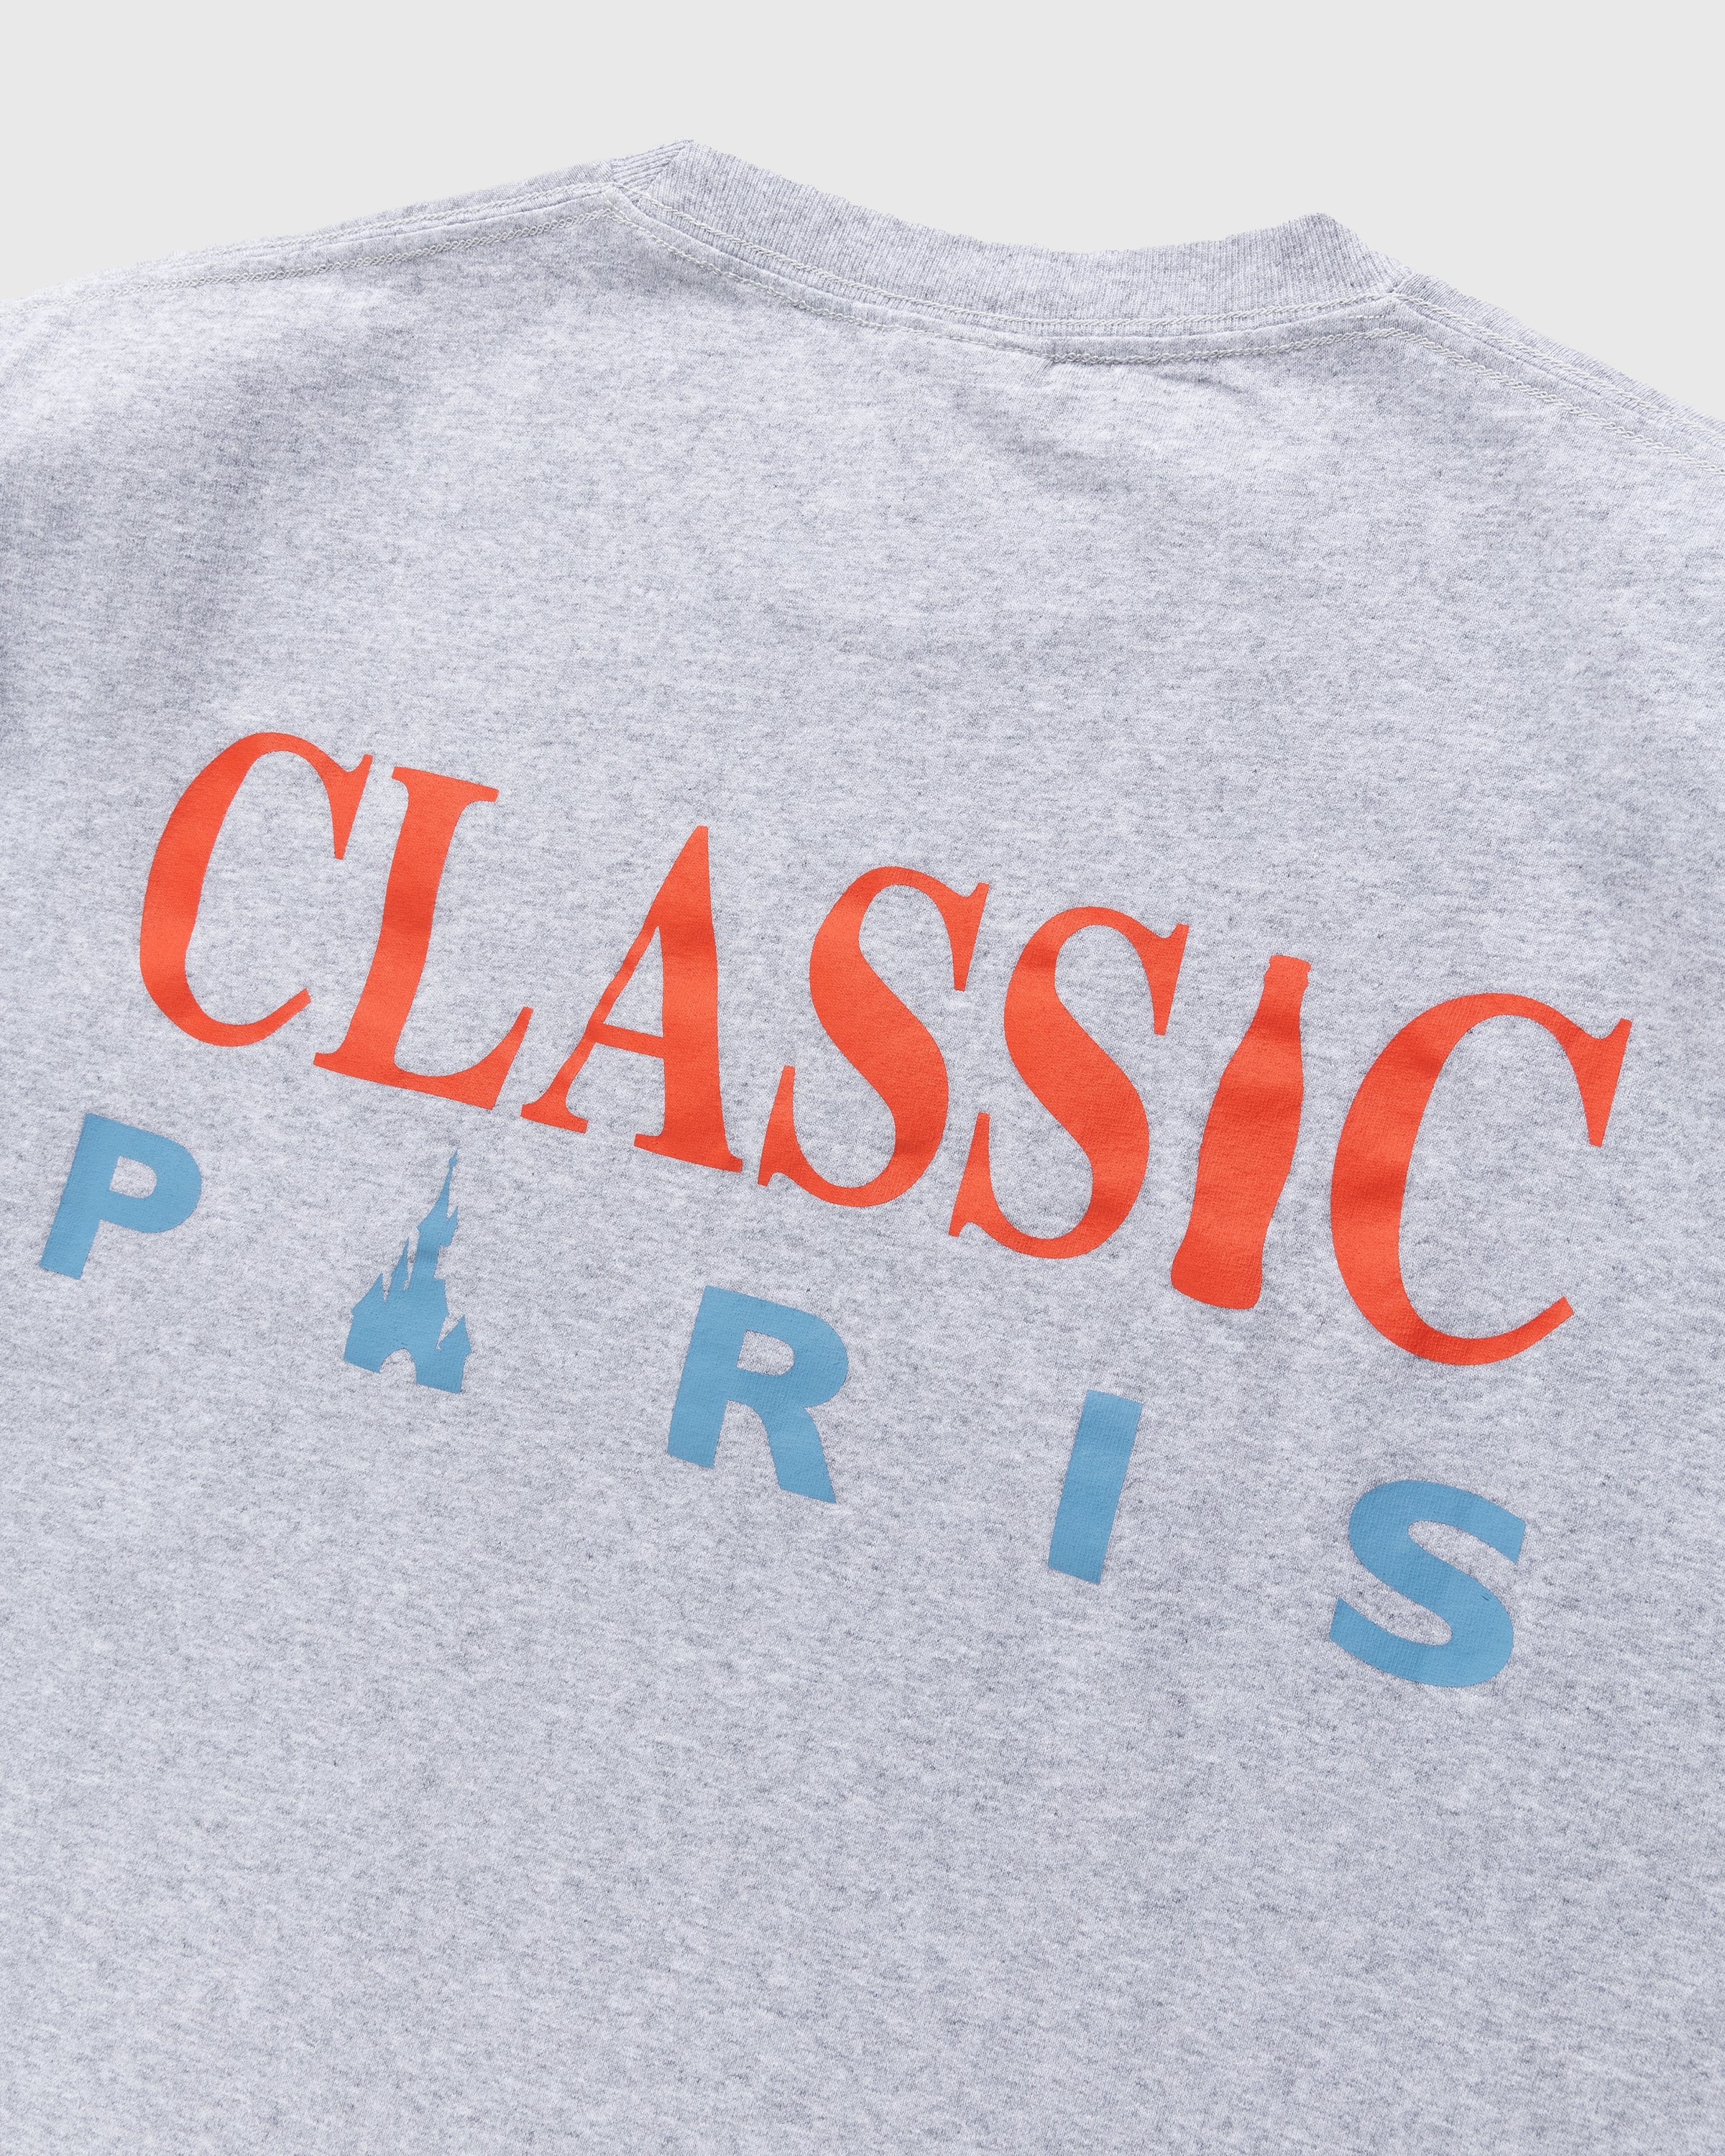 Coca-Cola x Disneyland Paris - Not In Paris 4 Classic Paris T-Shirt Grey - Clothing - Grey - Image 4